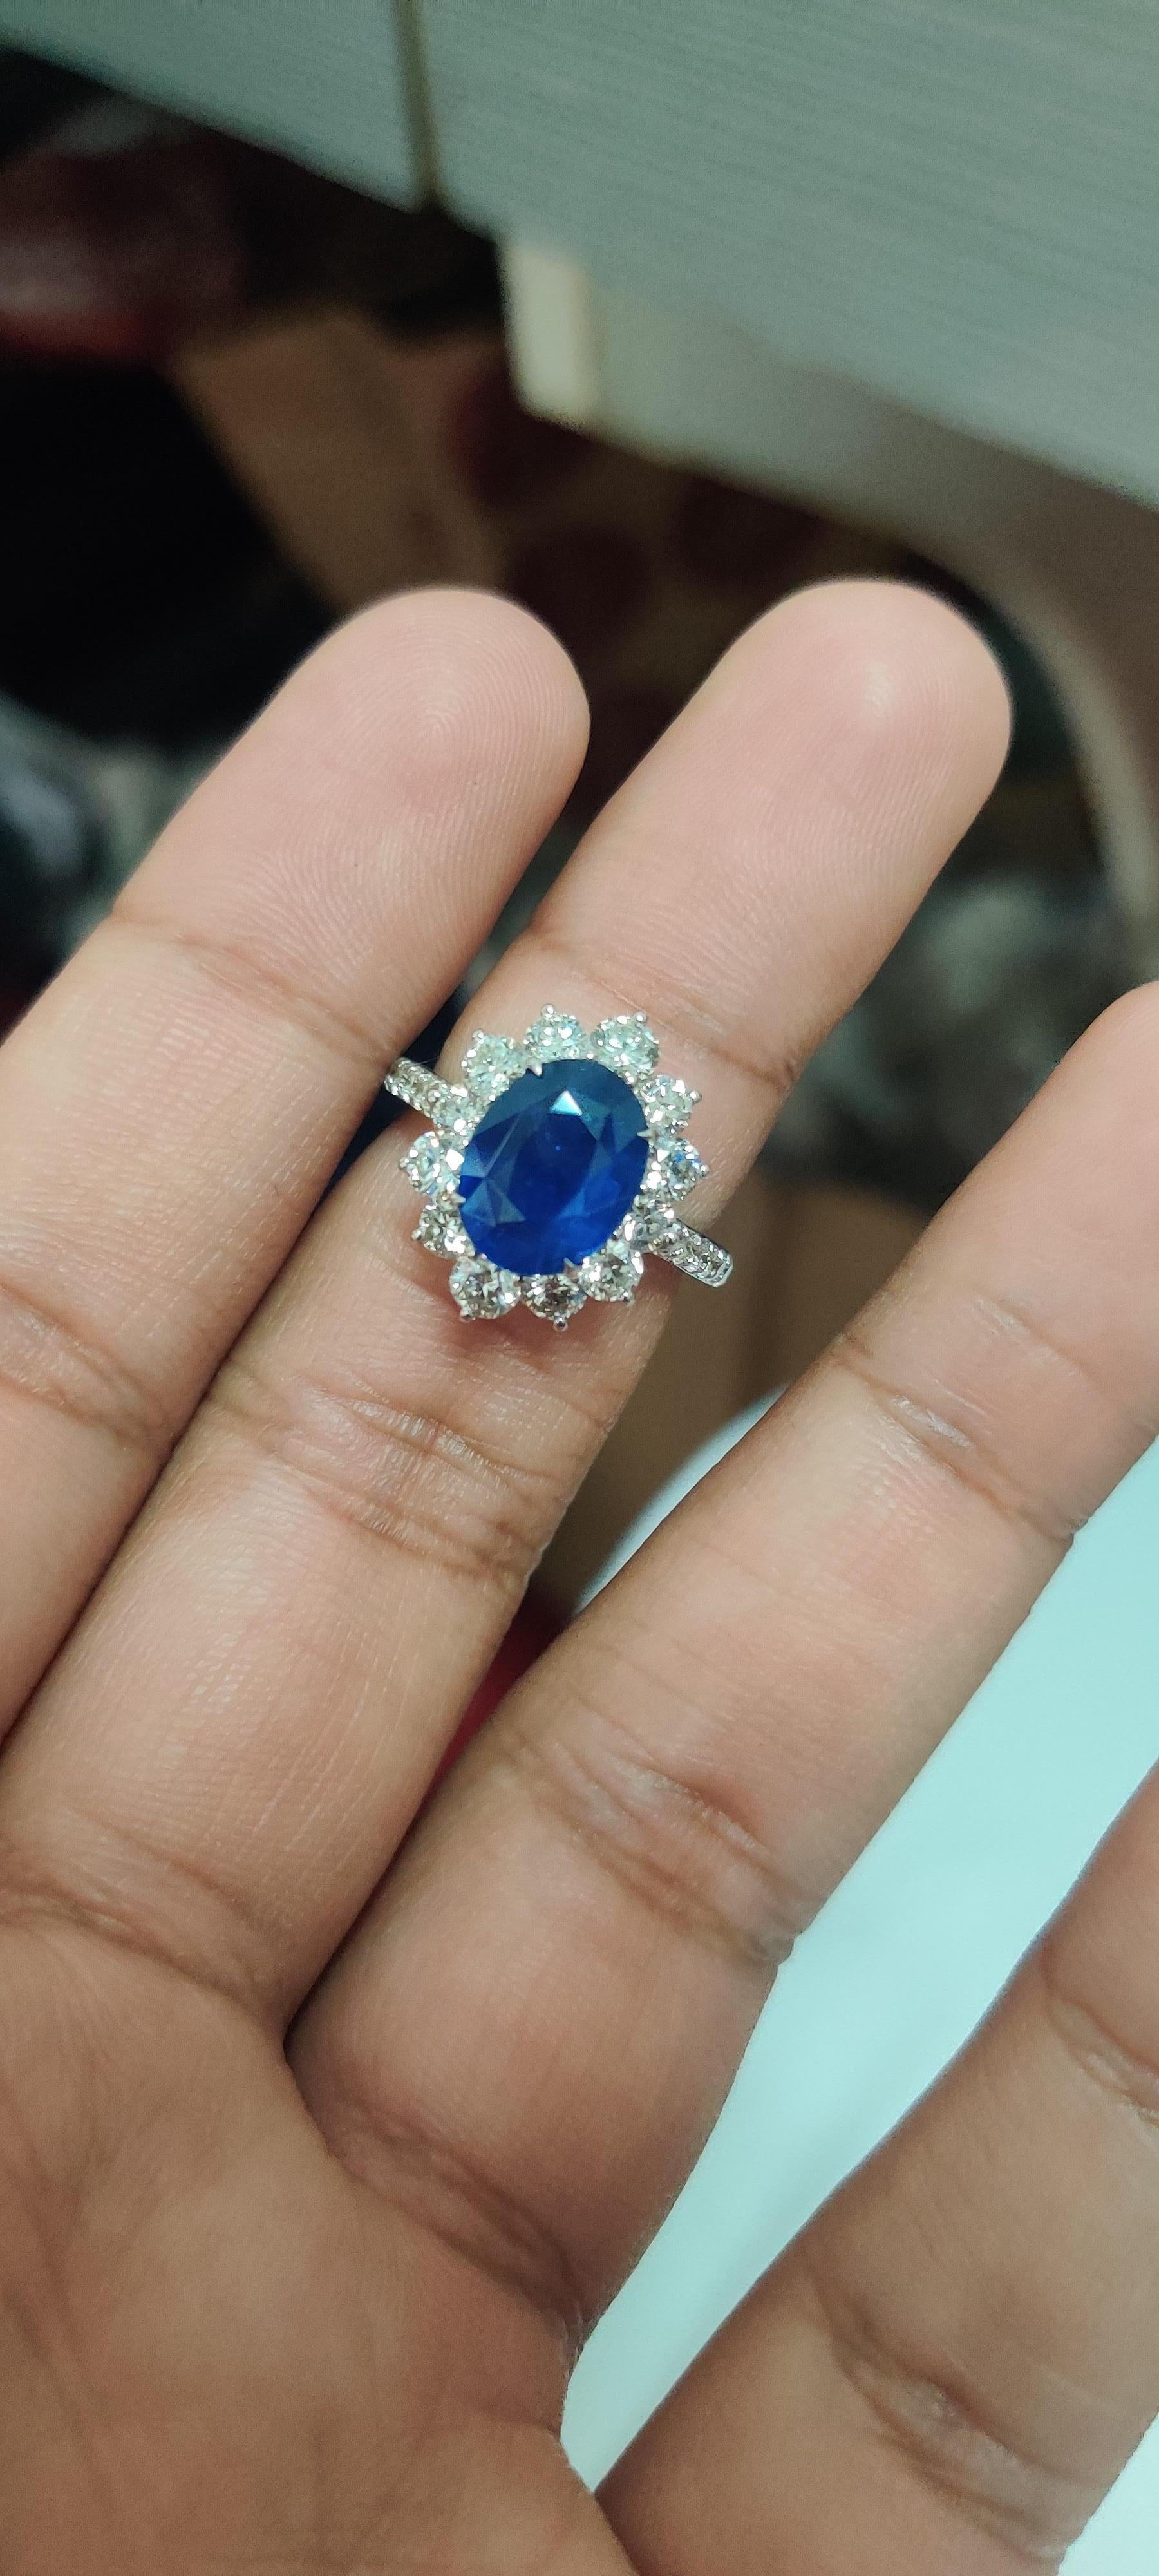 Women's 4.19 Carat Sapphire Diamond Cocktail Ring For Sale